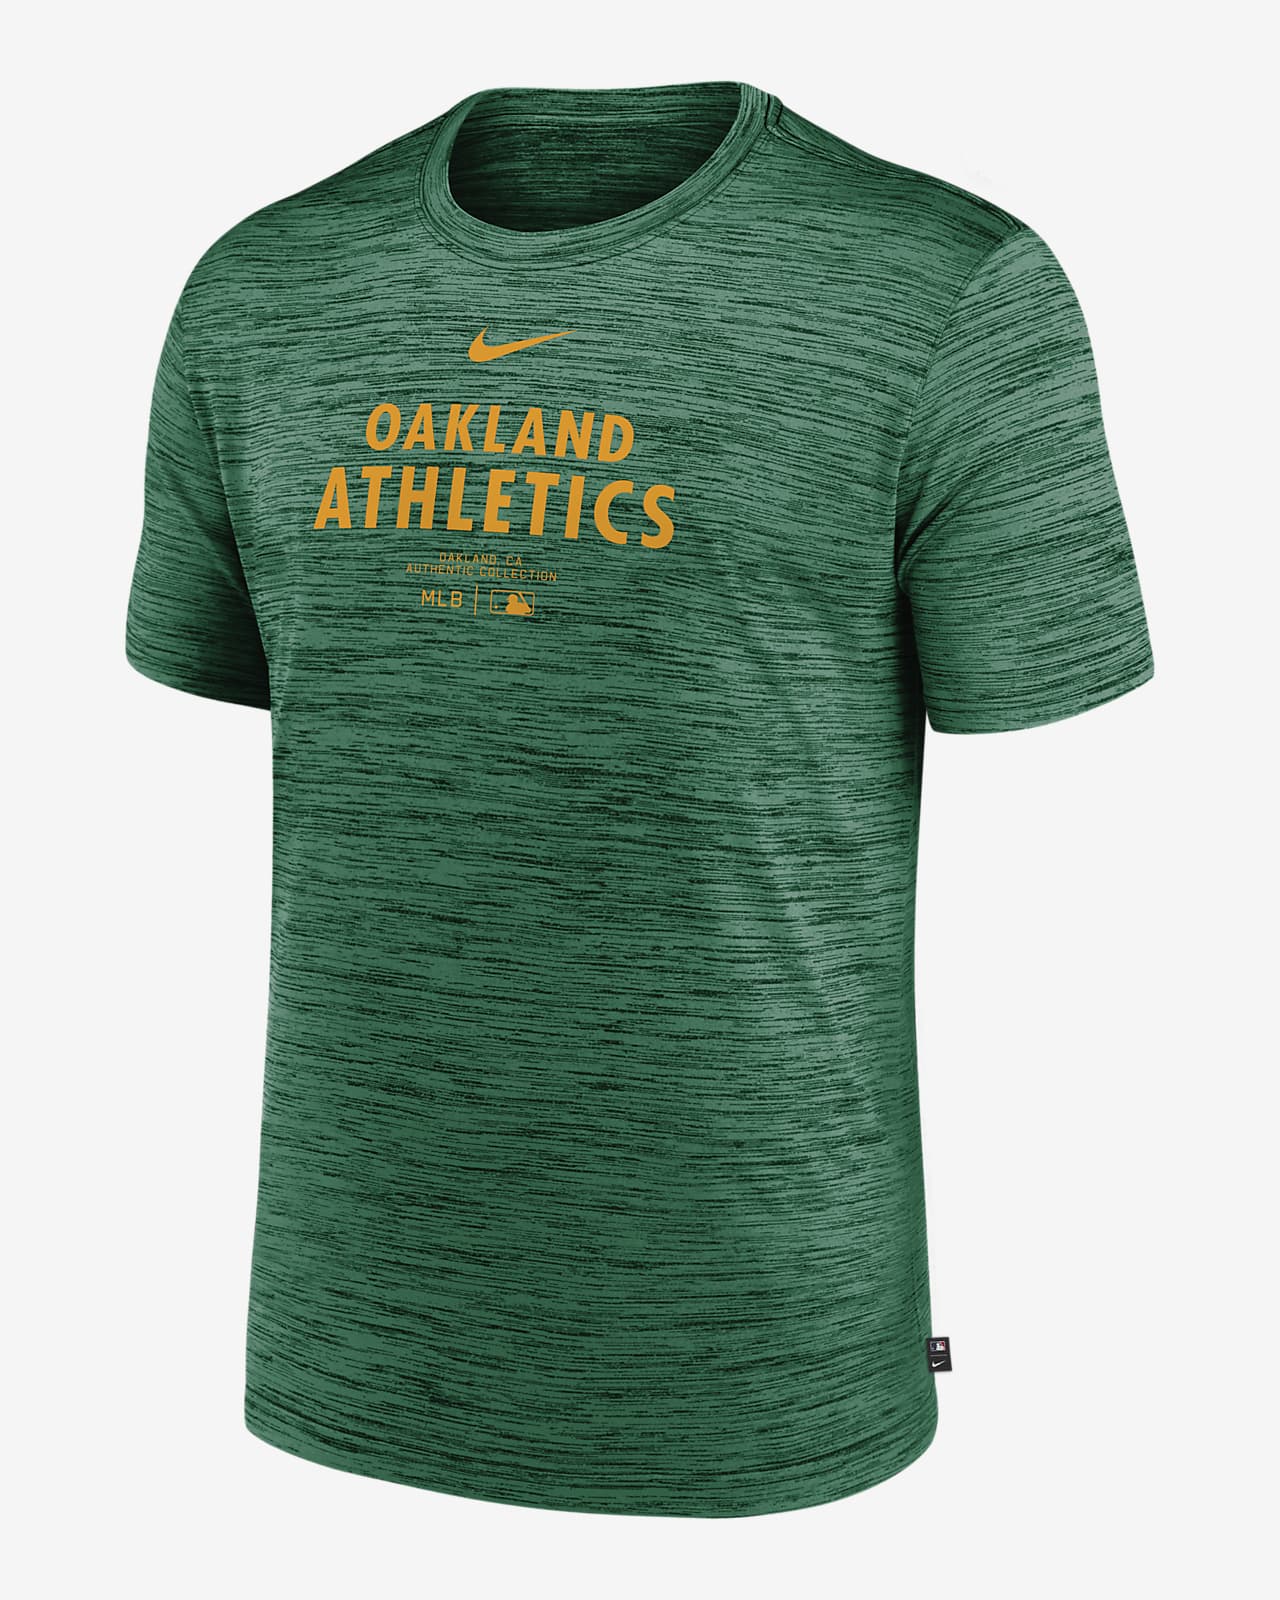 Oakland Athletics Authentic Collection Practice Velocity Men's Nike Dri-FIT MLB T-Shirt